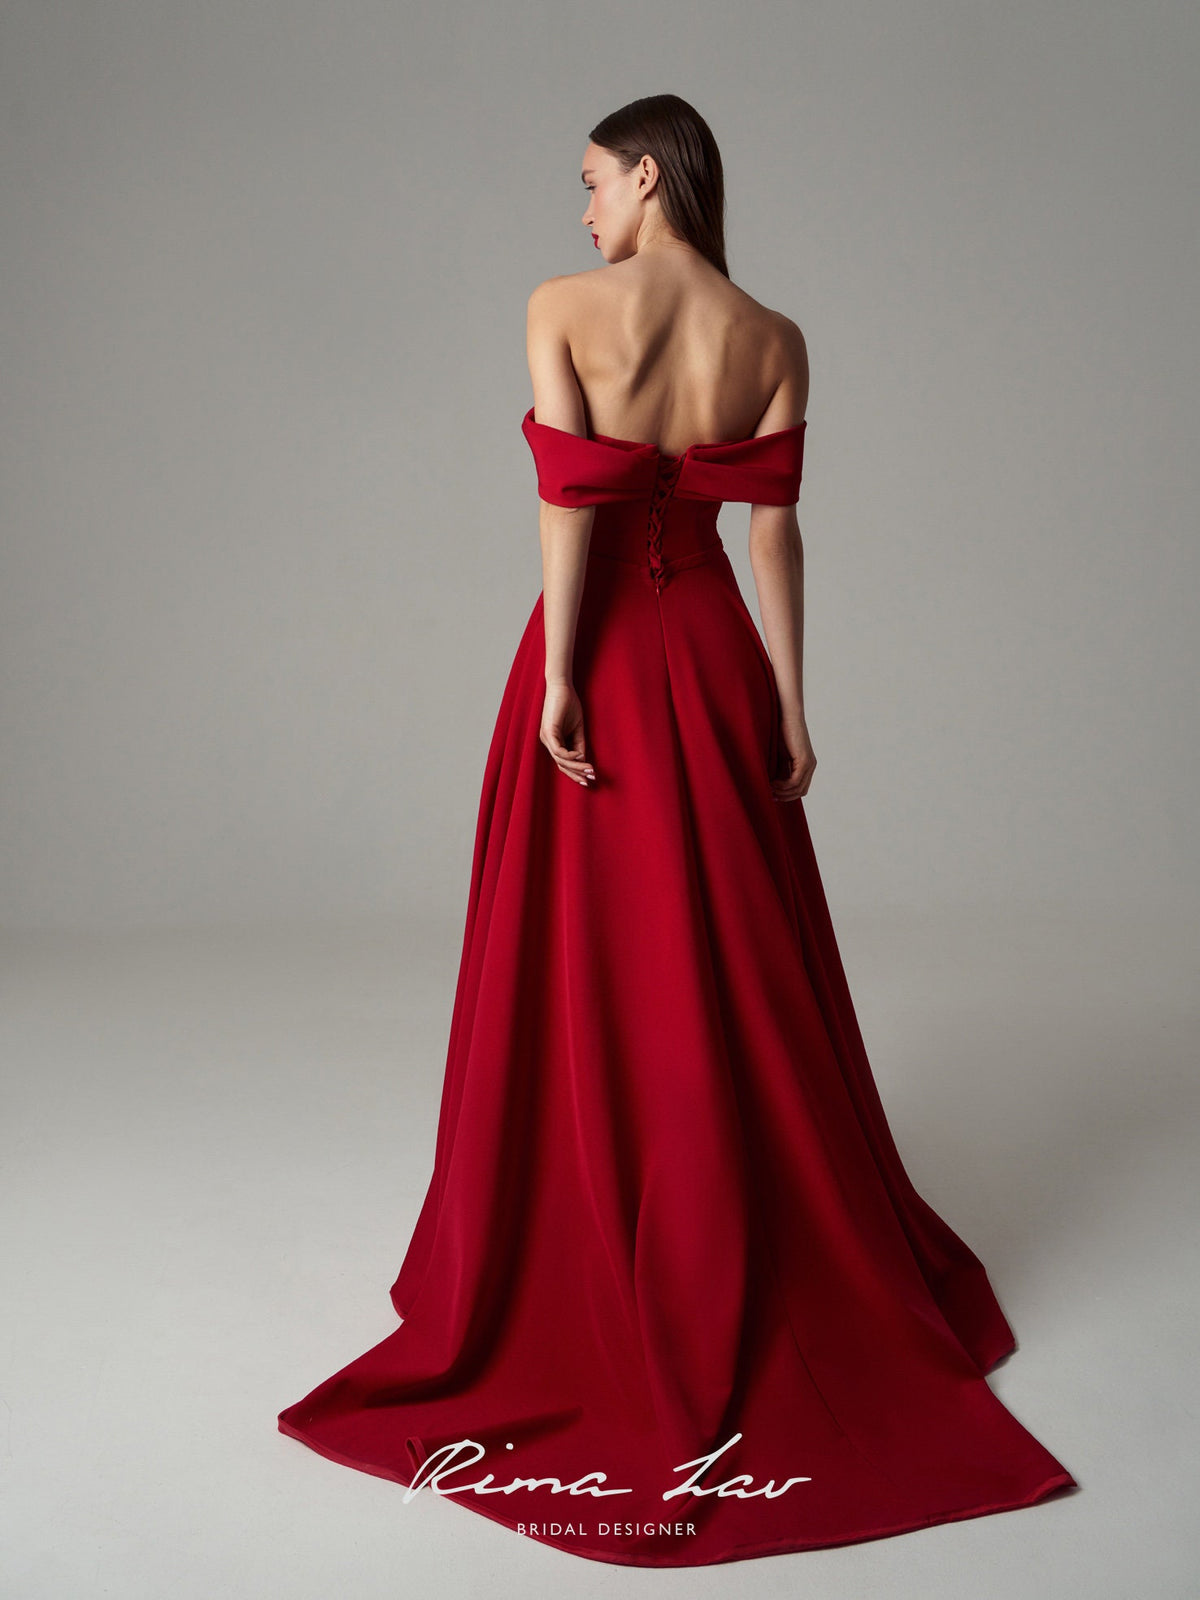 Beautiful Minimalist Off the Shoulder Neckline Aline Red Wedding Dress Bridal Gowns Plus Size Train Simple Classic Design Side Slit Corset